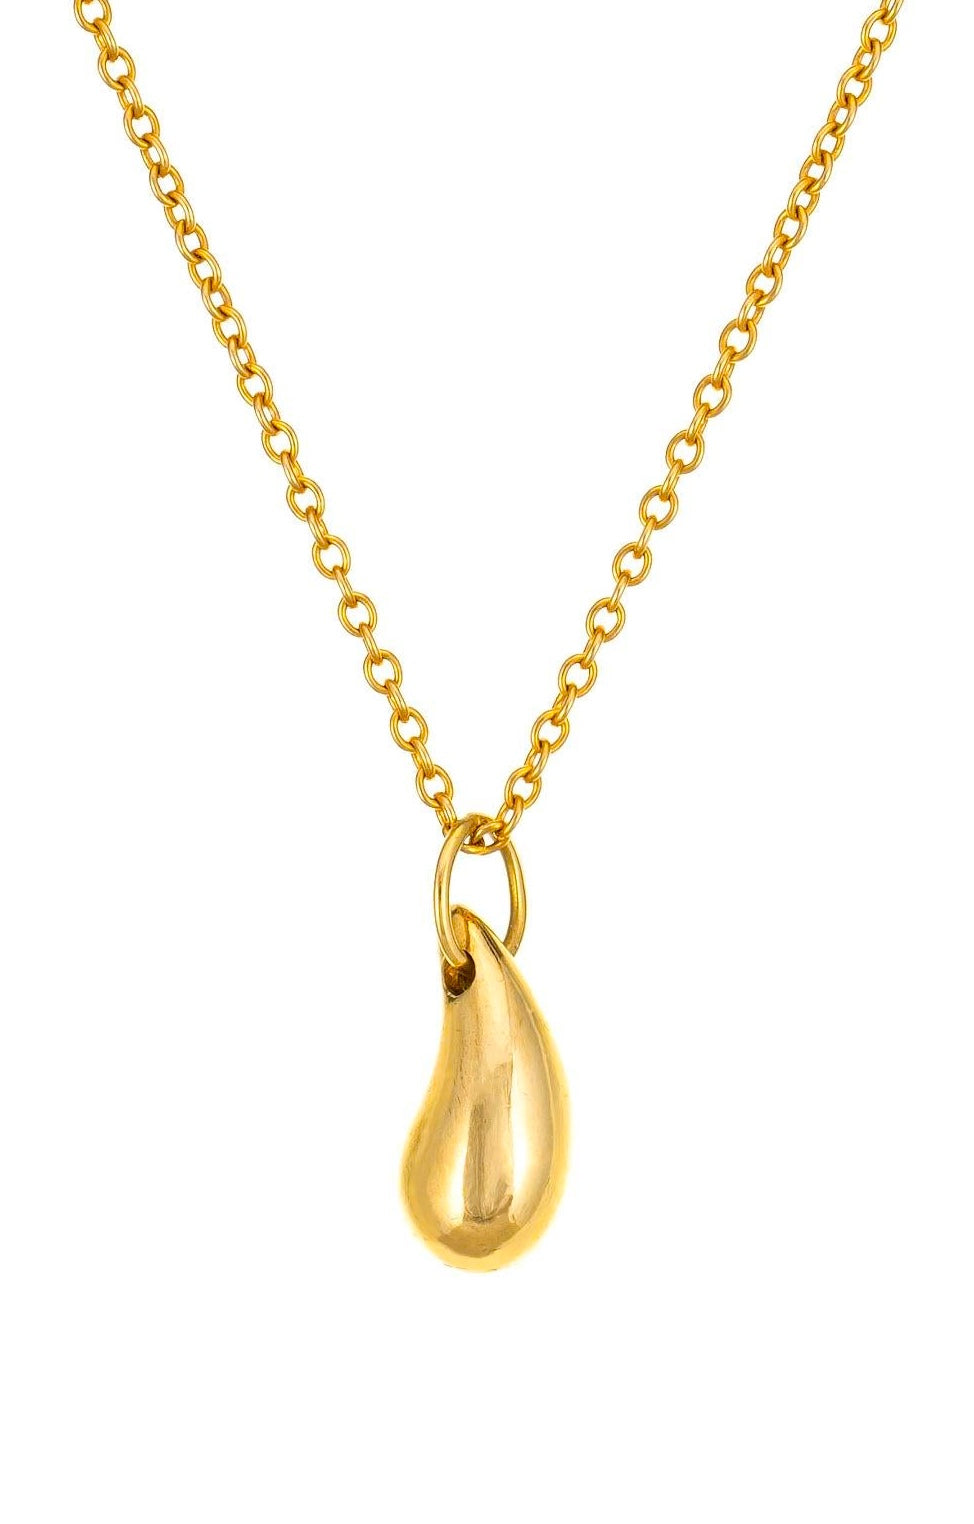 18k gold Modern Tear Drop Necklace